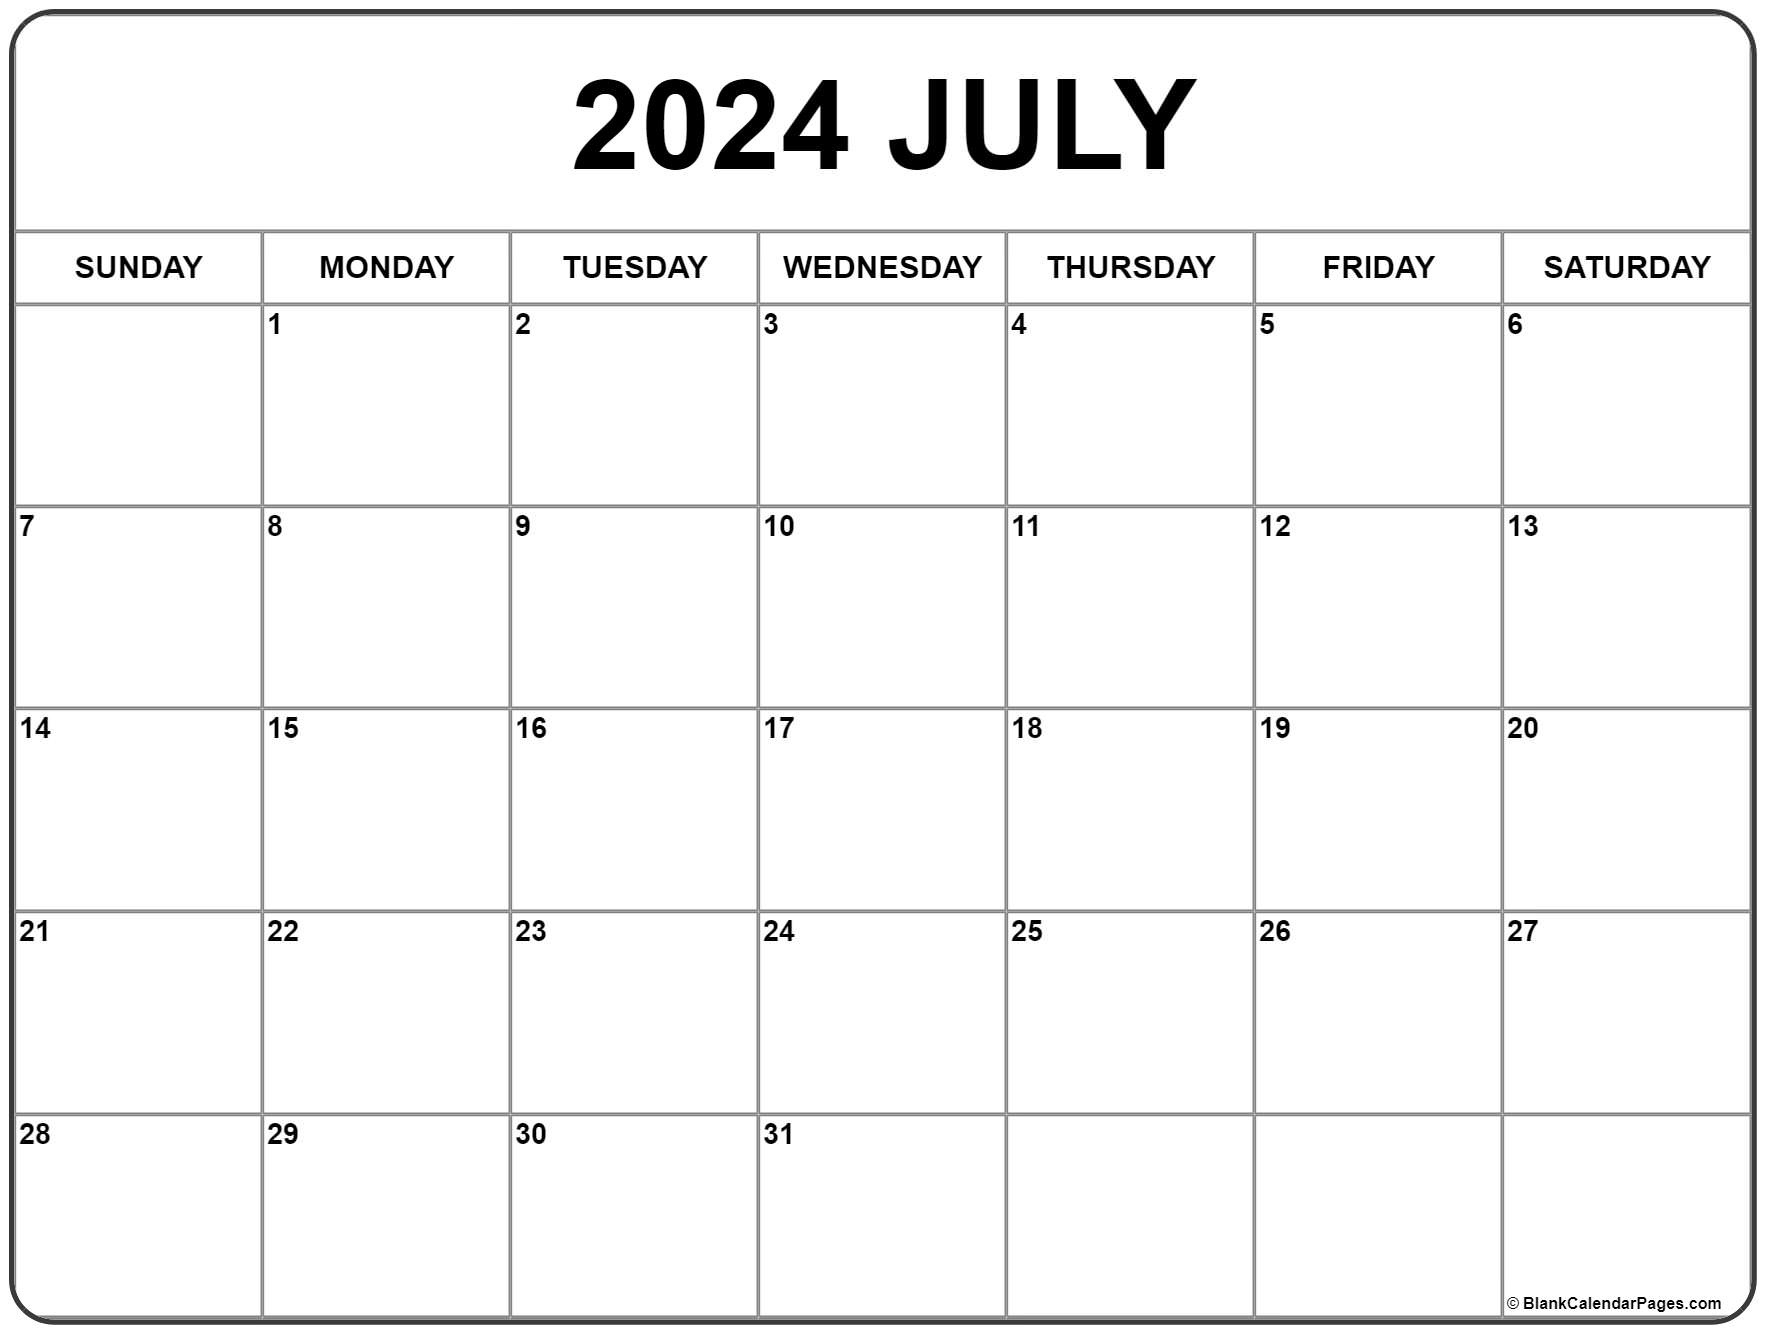 July 2024 Calendar | Free Printable Calendar intended for Printable July 2024 Calendar Free